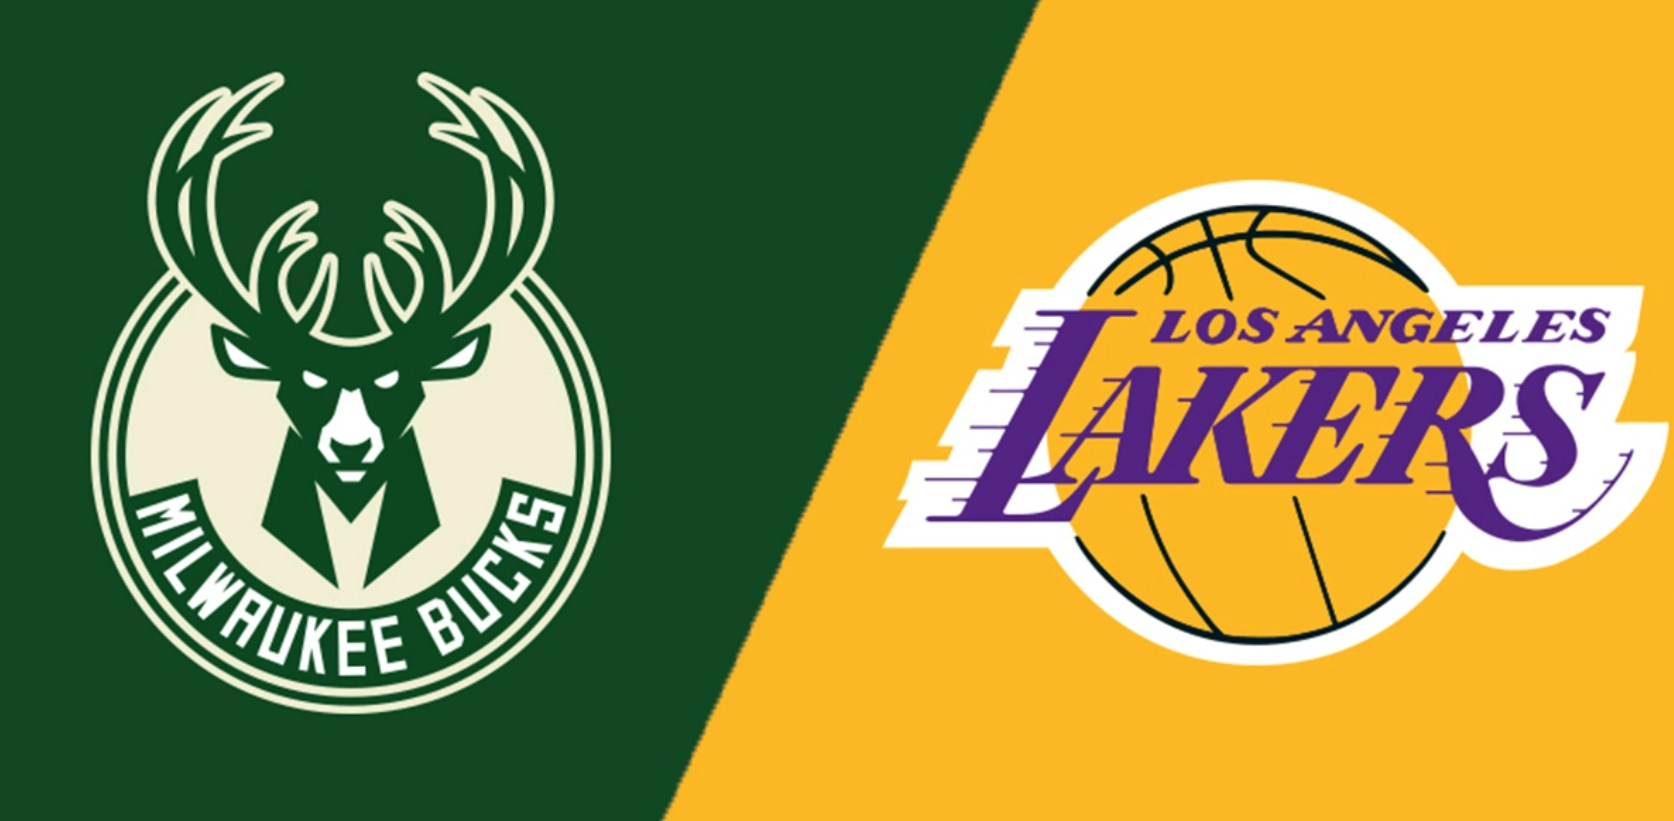 Milwaukee Bucks vs. Lakers: Close Battle Ends in Critical 123-122 Loss for Bucks